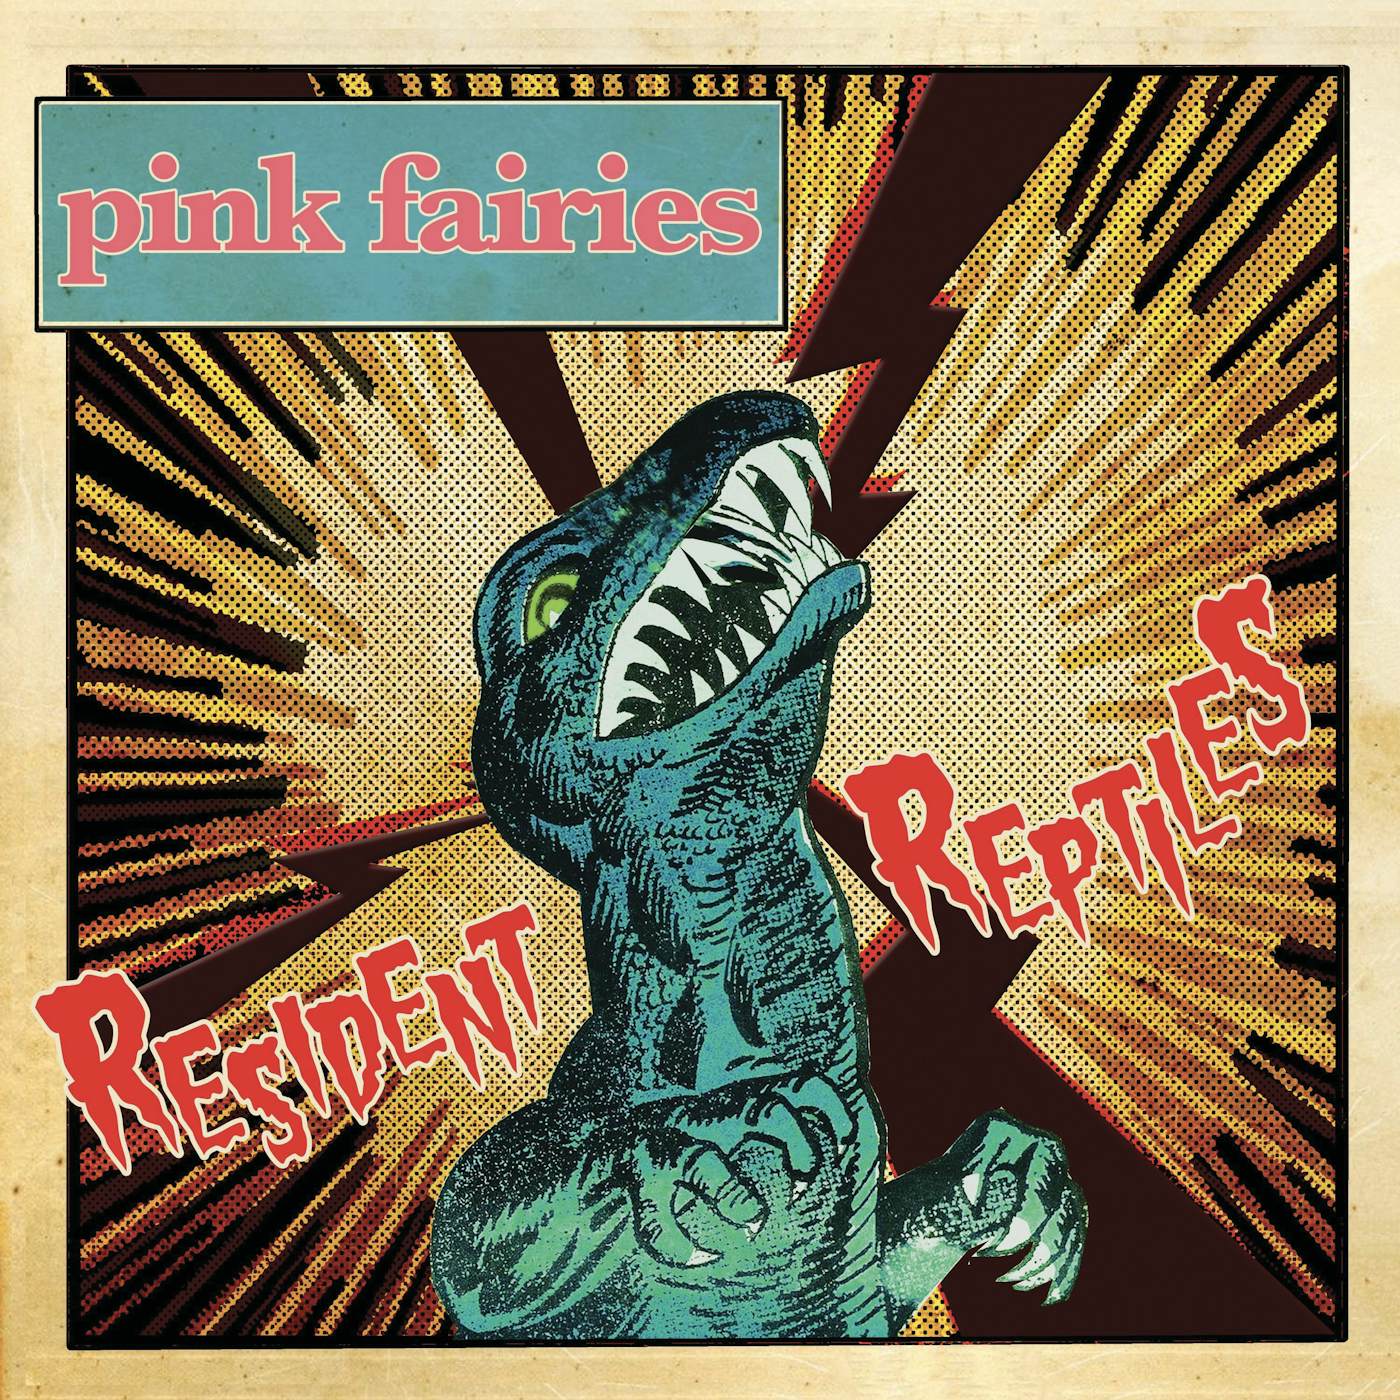 The Pink Fairies Resident Reptiles Vinyl Record